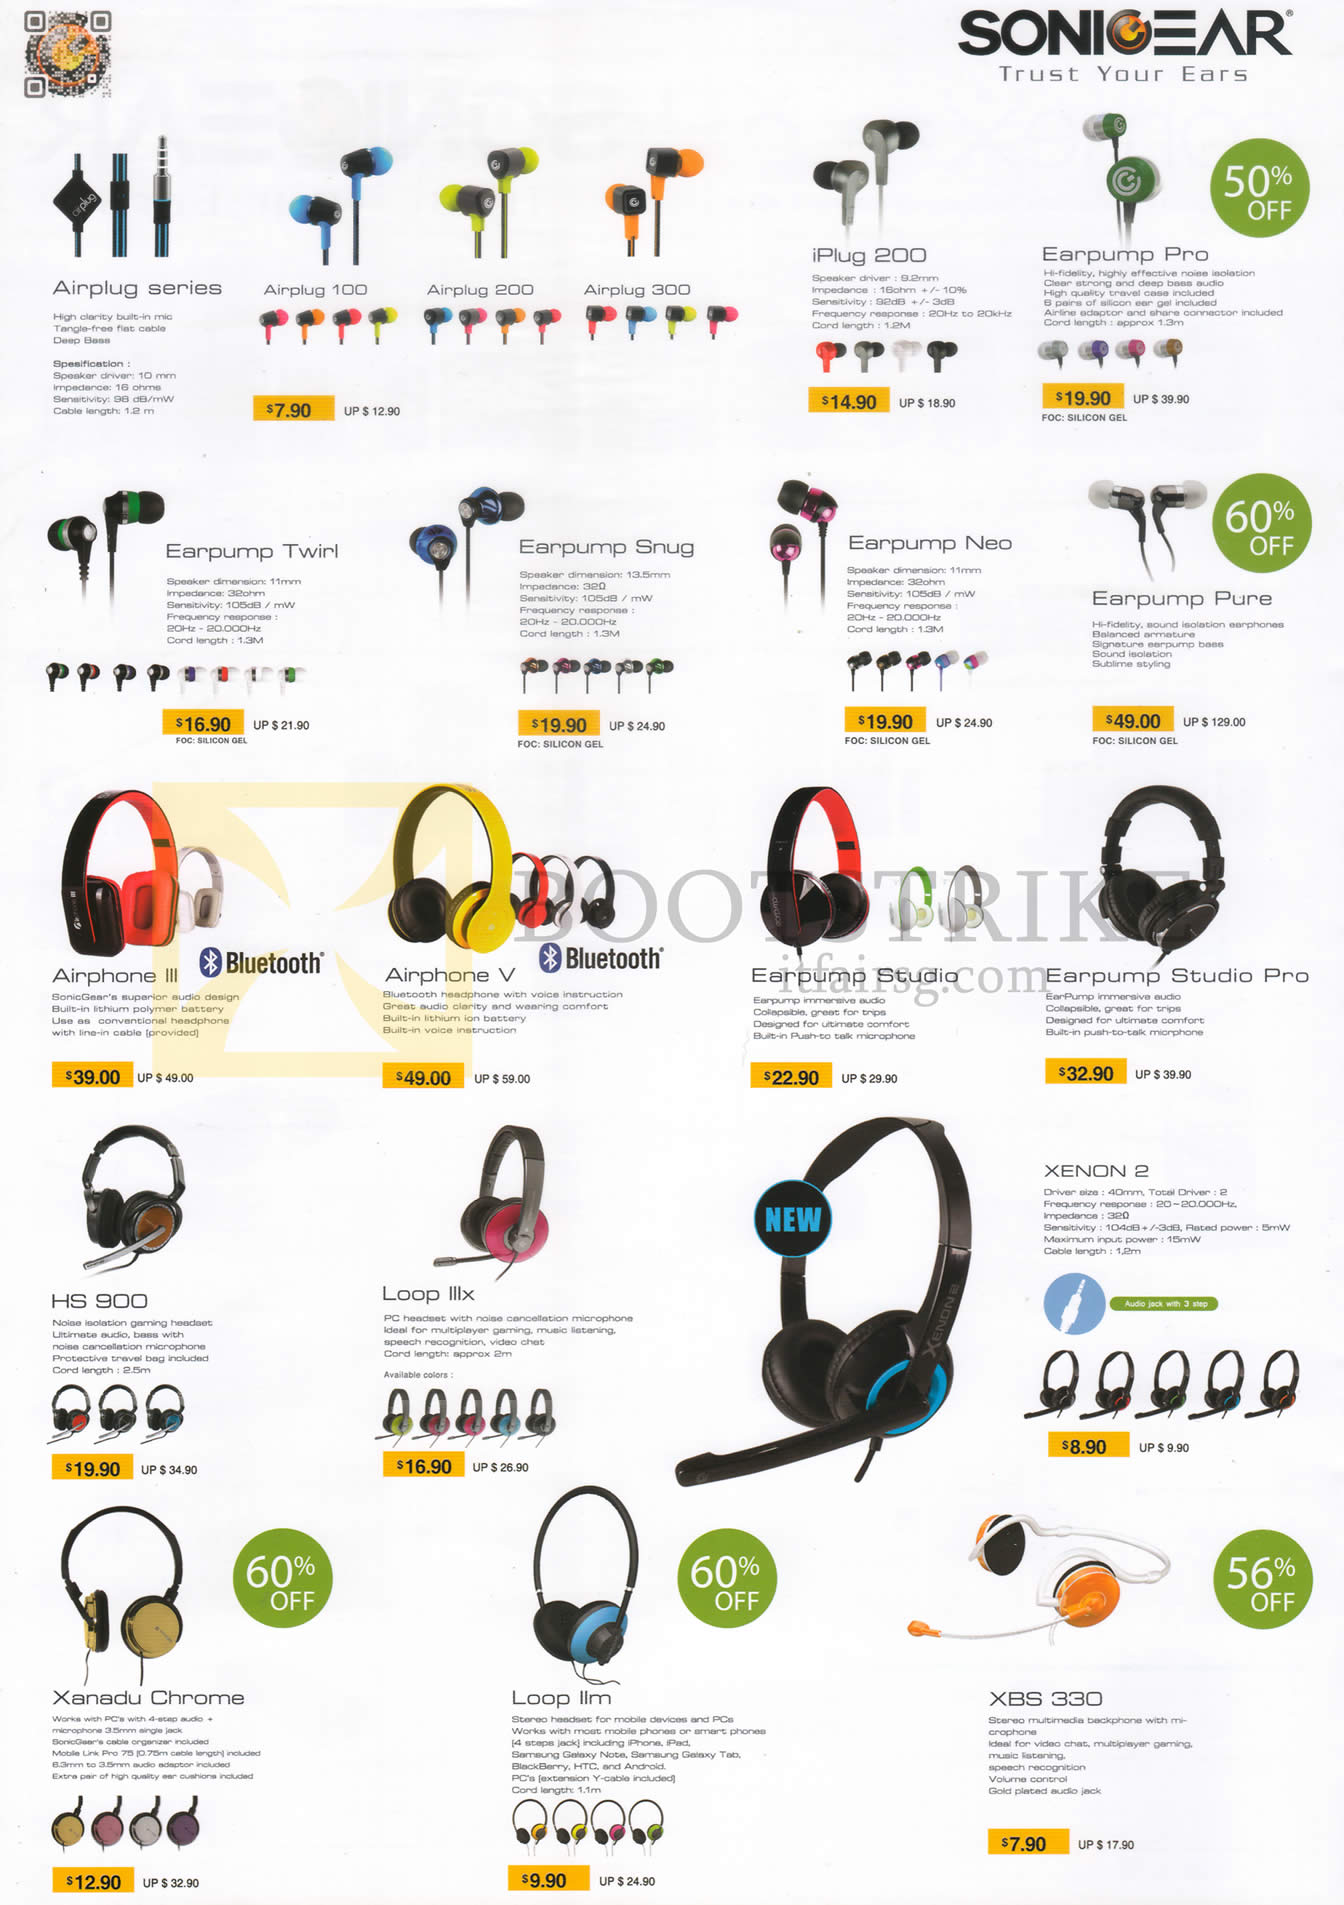 COMEX 2014 price list image brochure of SonicGear Headsets Earphones, Airplug 100 200 300, IPlug 200, Earpump Pro Neo Snug Twirl Pure, Airphone III V, Studio Pro, HS900, Loop IIIx, Xenon 2, Xanadu Chrome, Loop IIm, XBS 330